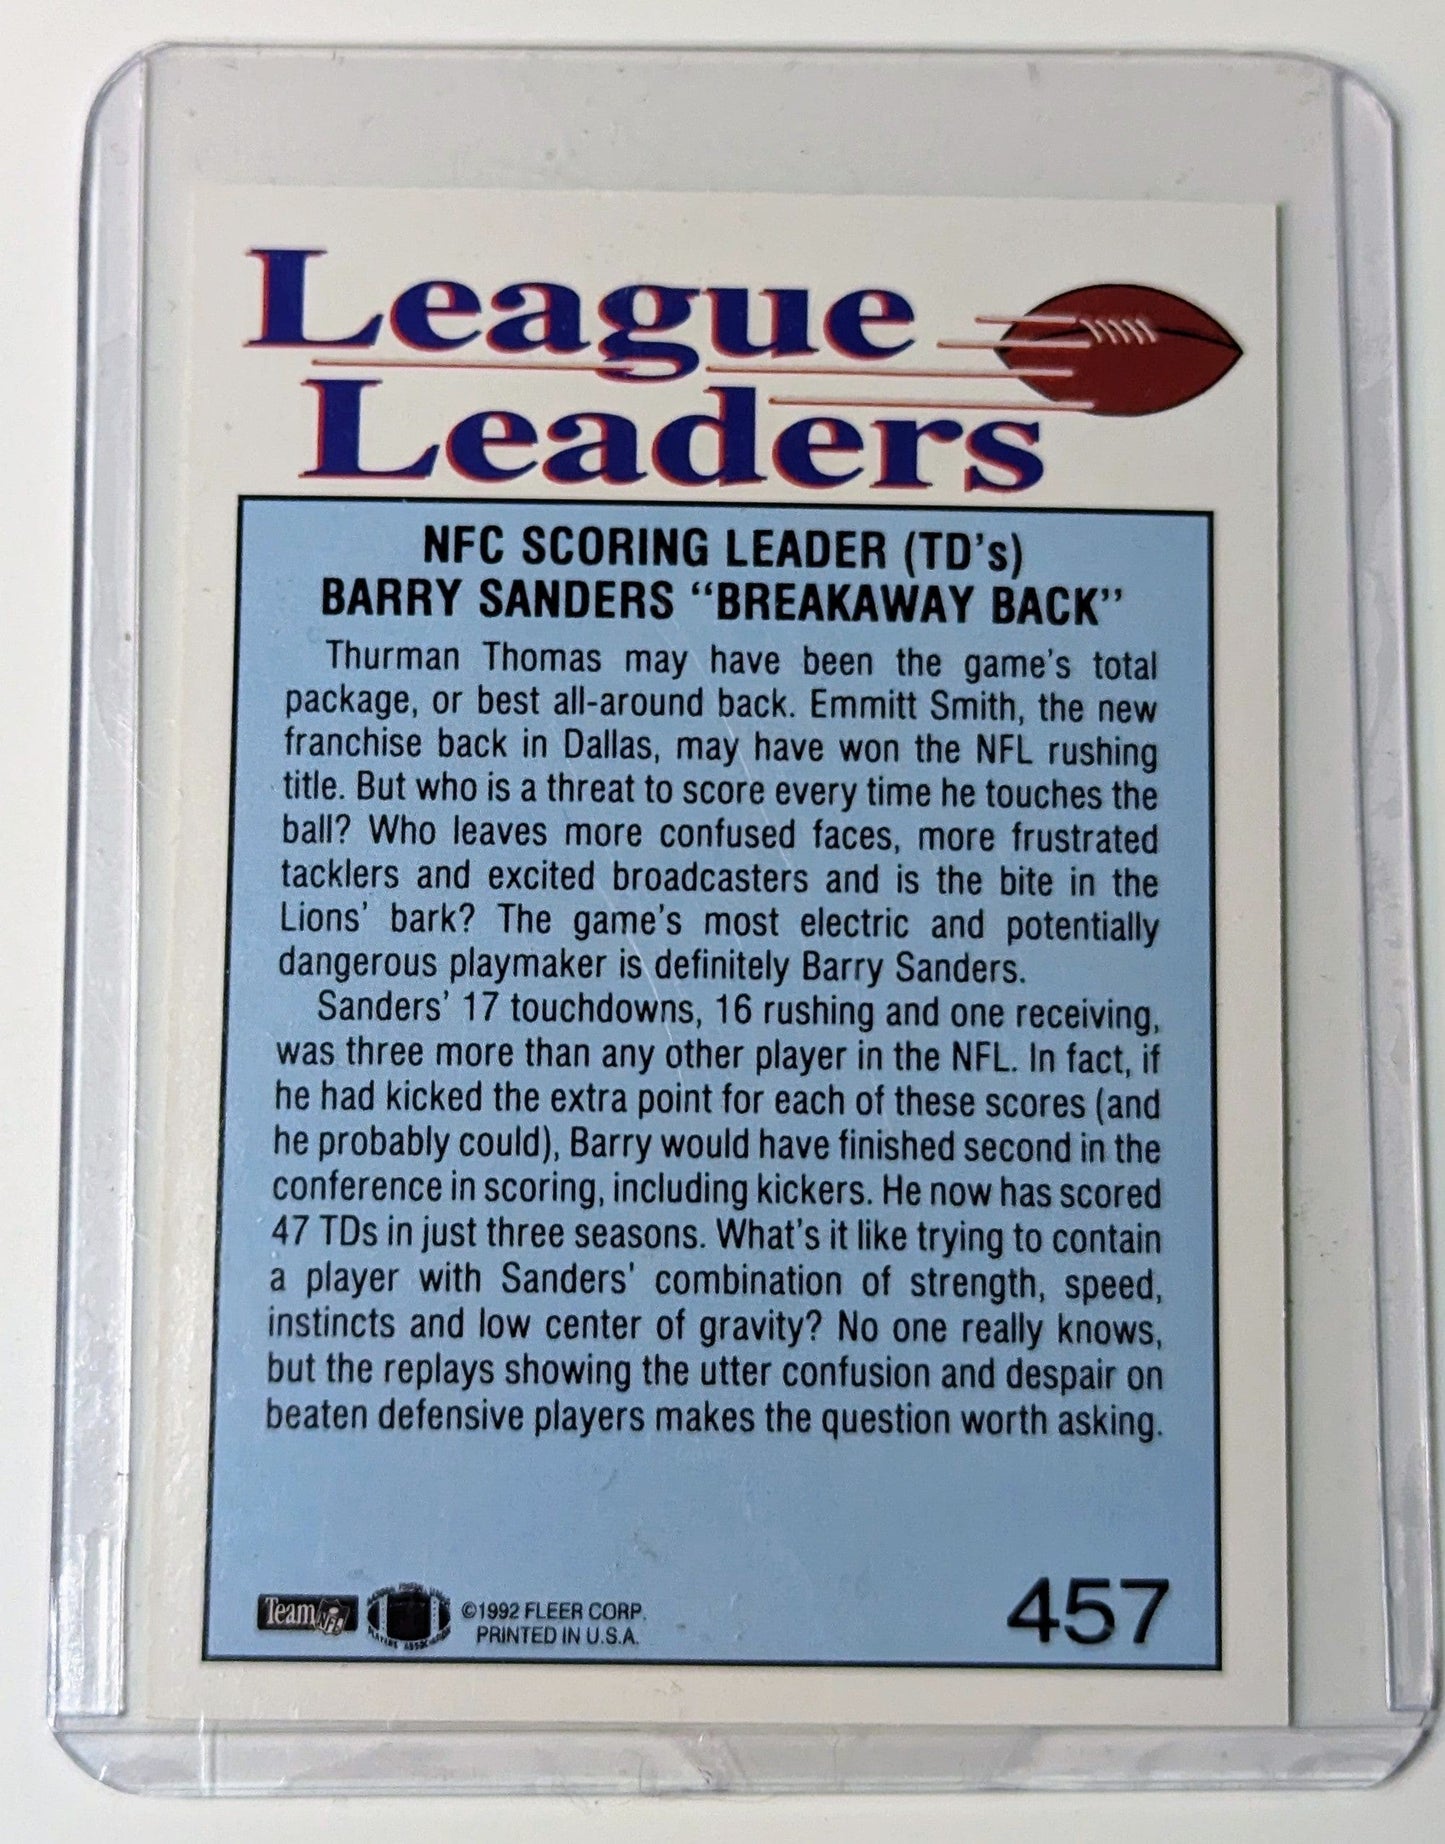 FIINR Football Card 1992 Fleer Barry Sanders leader Football Card #457 - Mint Condition